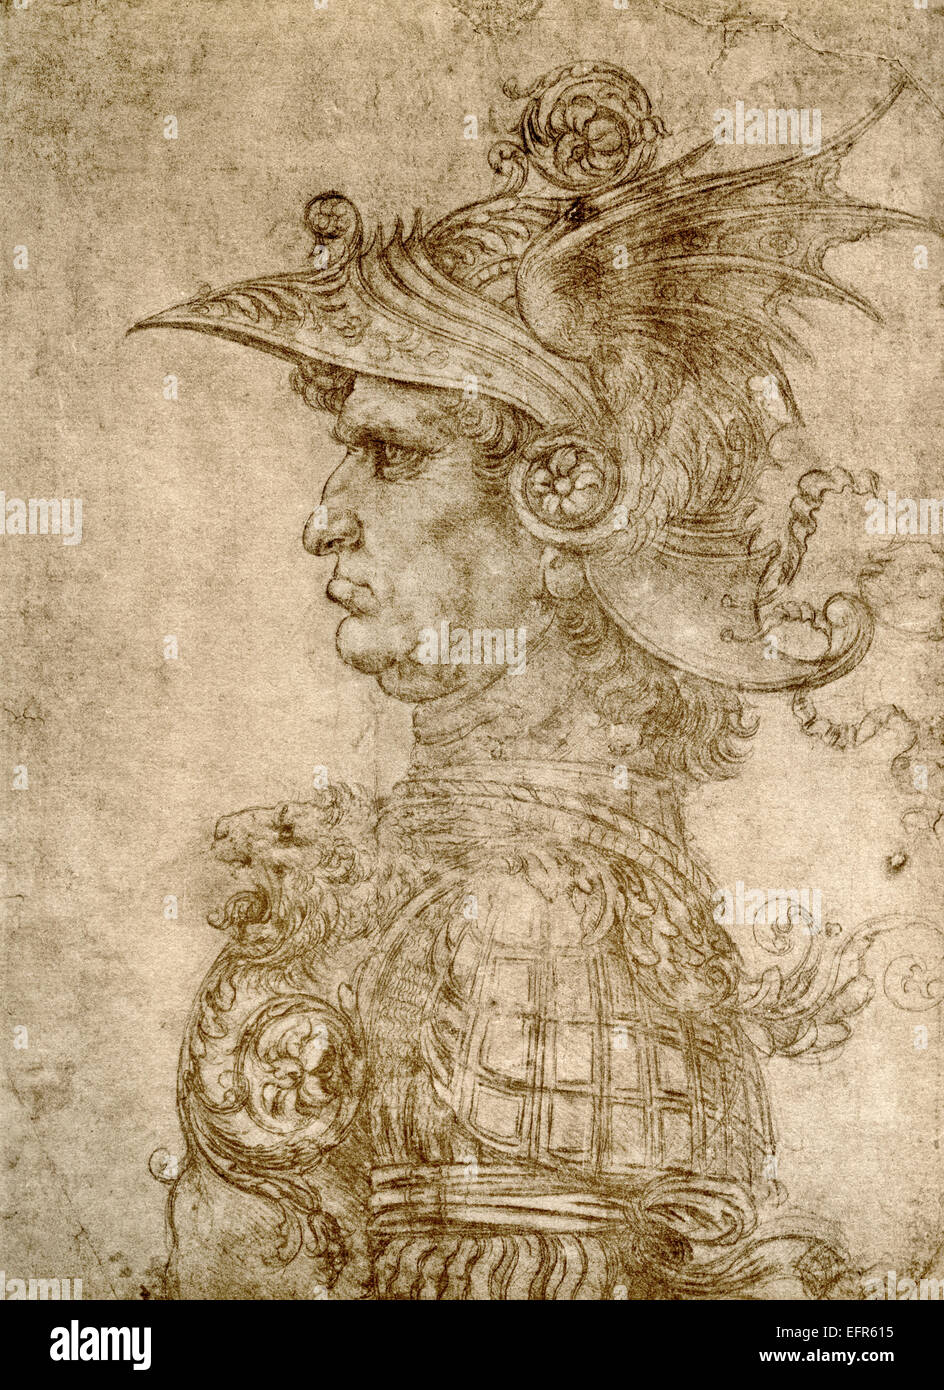 Profile of an ancient Captain, aka Condottiero, The Warlord, circa 1472, after Leonardo da Vinci, 1452-1519, drawing in silverpoint on prepared paper. Stock Photo